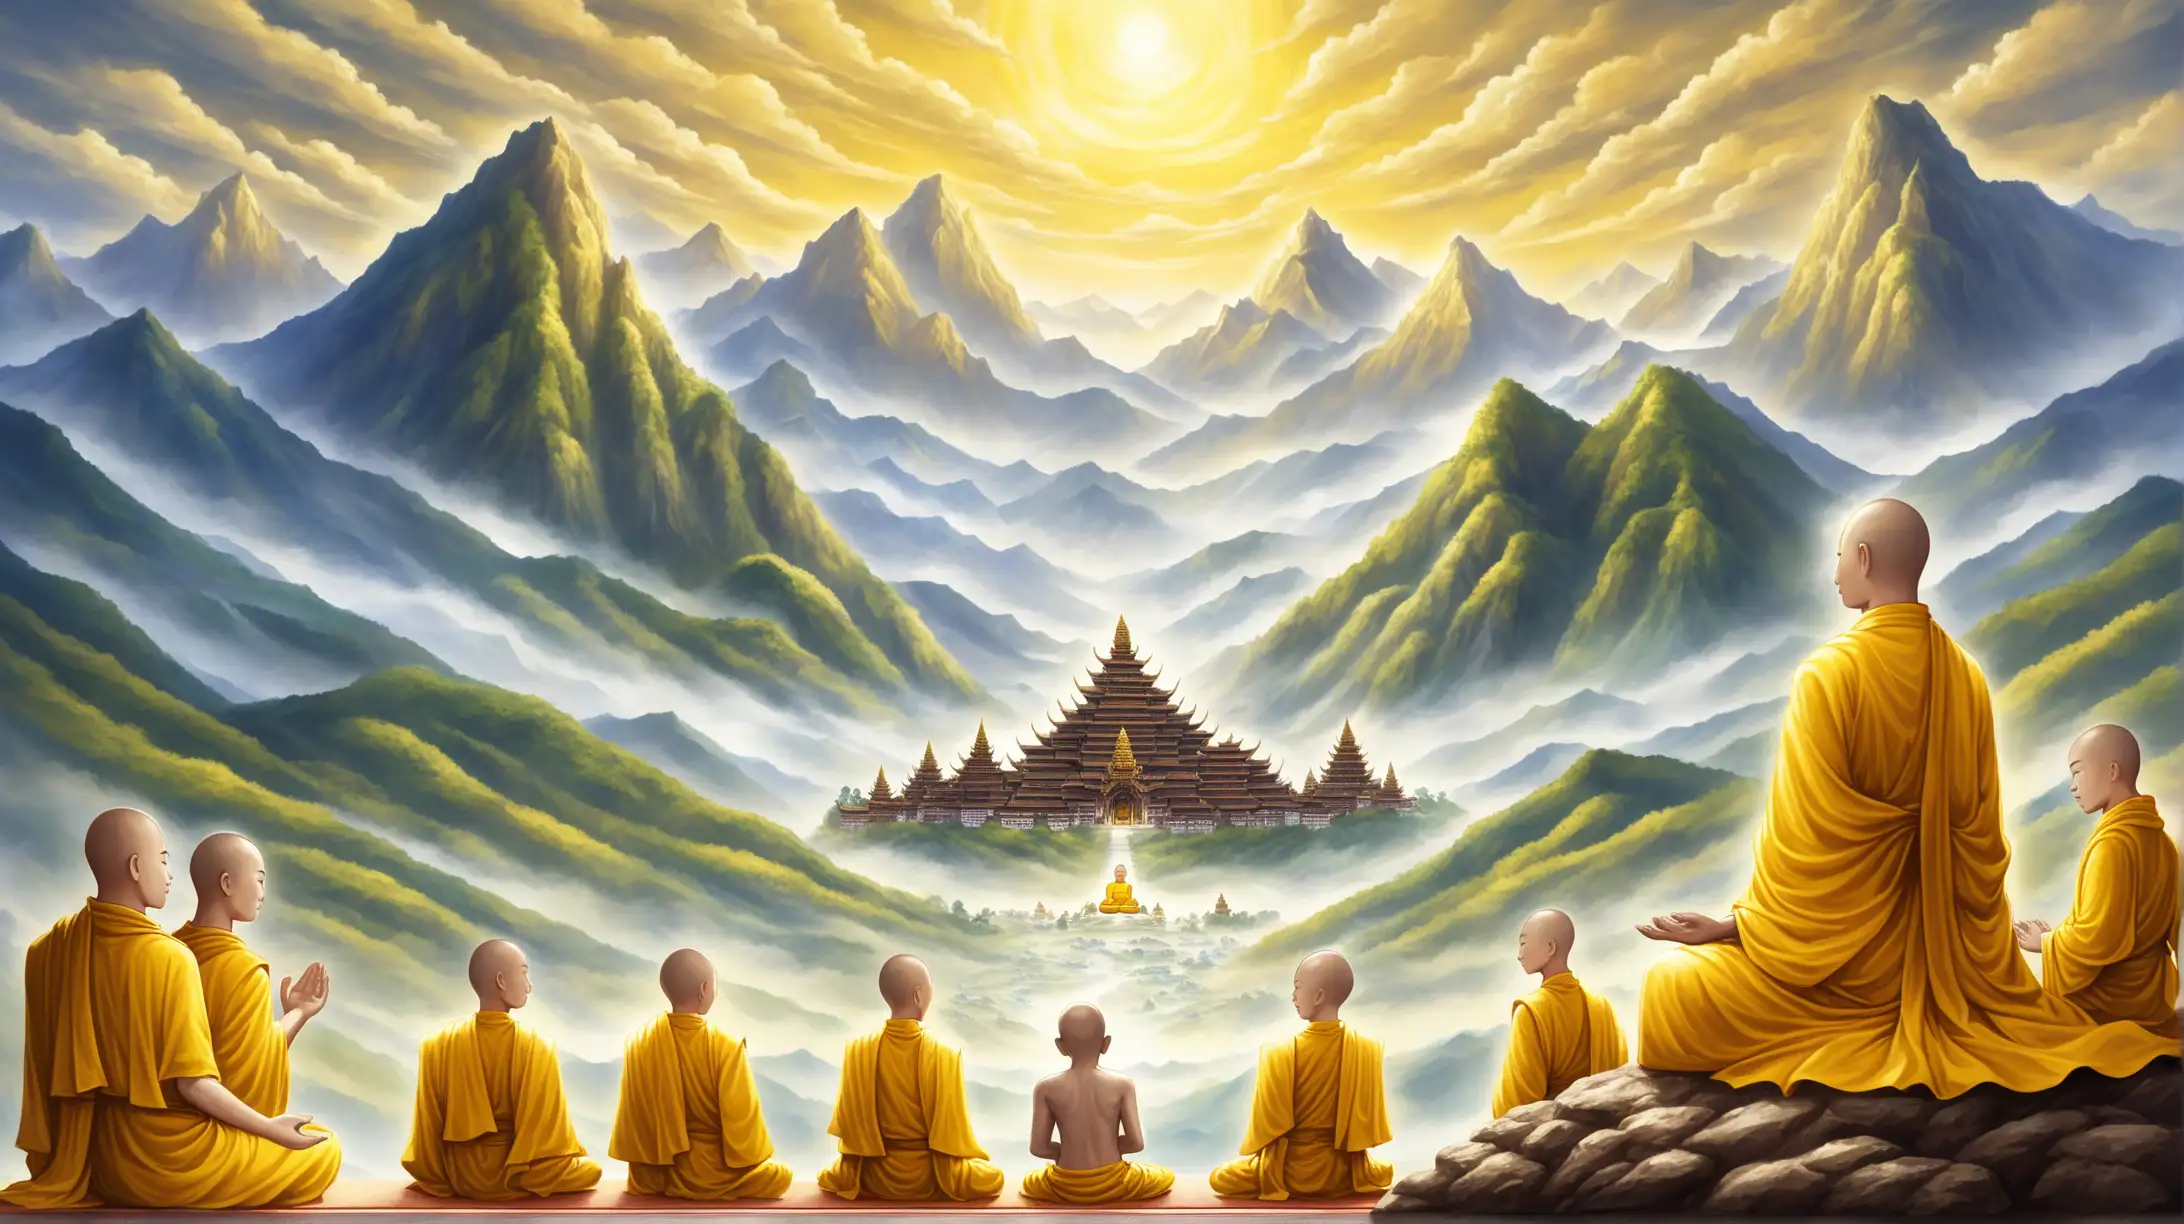 Radiant Buddha Teaching Monks Under Dramatic Sky in Majestic Mountain Region